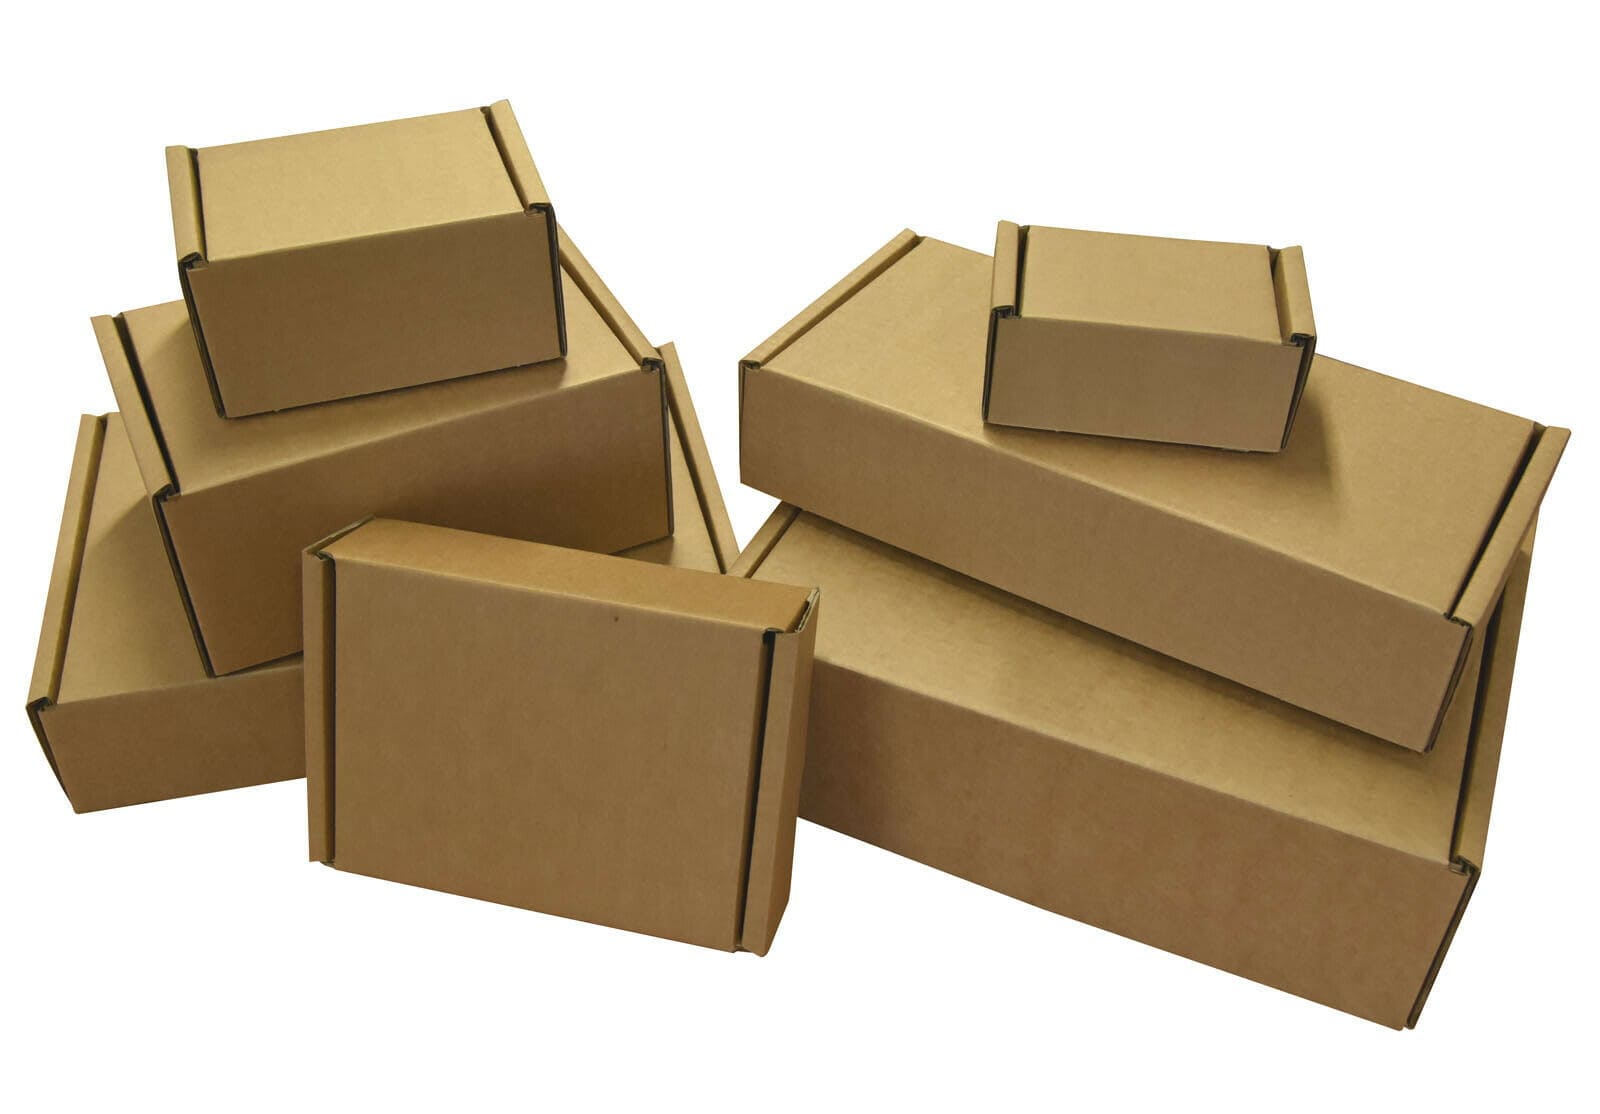 Картонный сайт. Картонные коробки. Картон для коробок. Коробки для посылок. Почтовые картонные коробки.